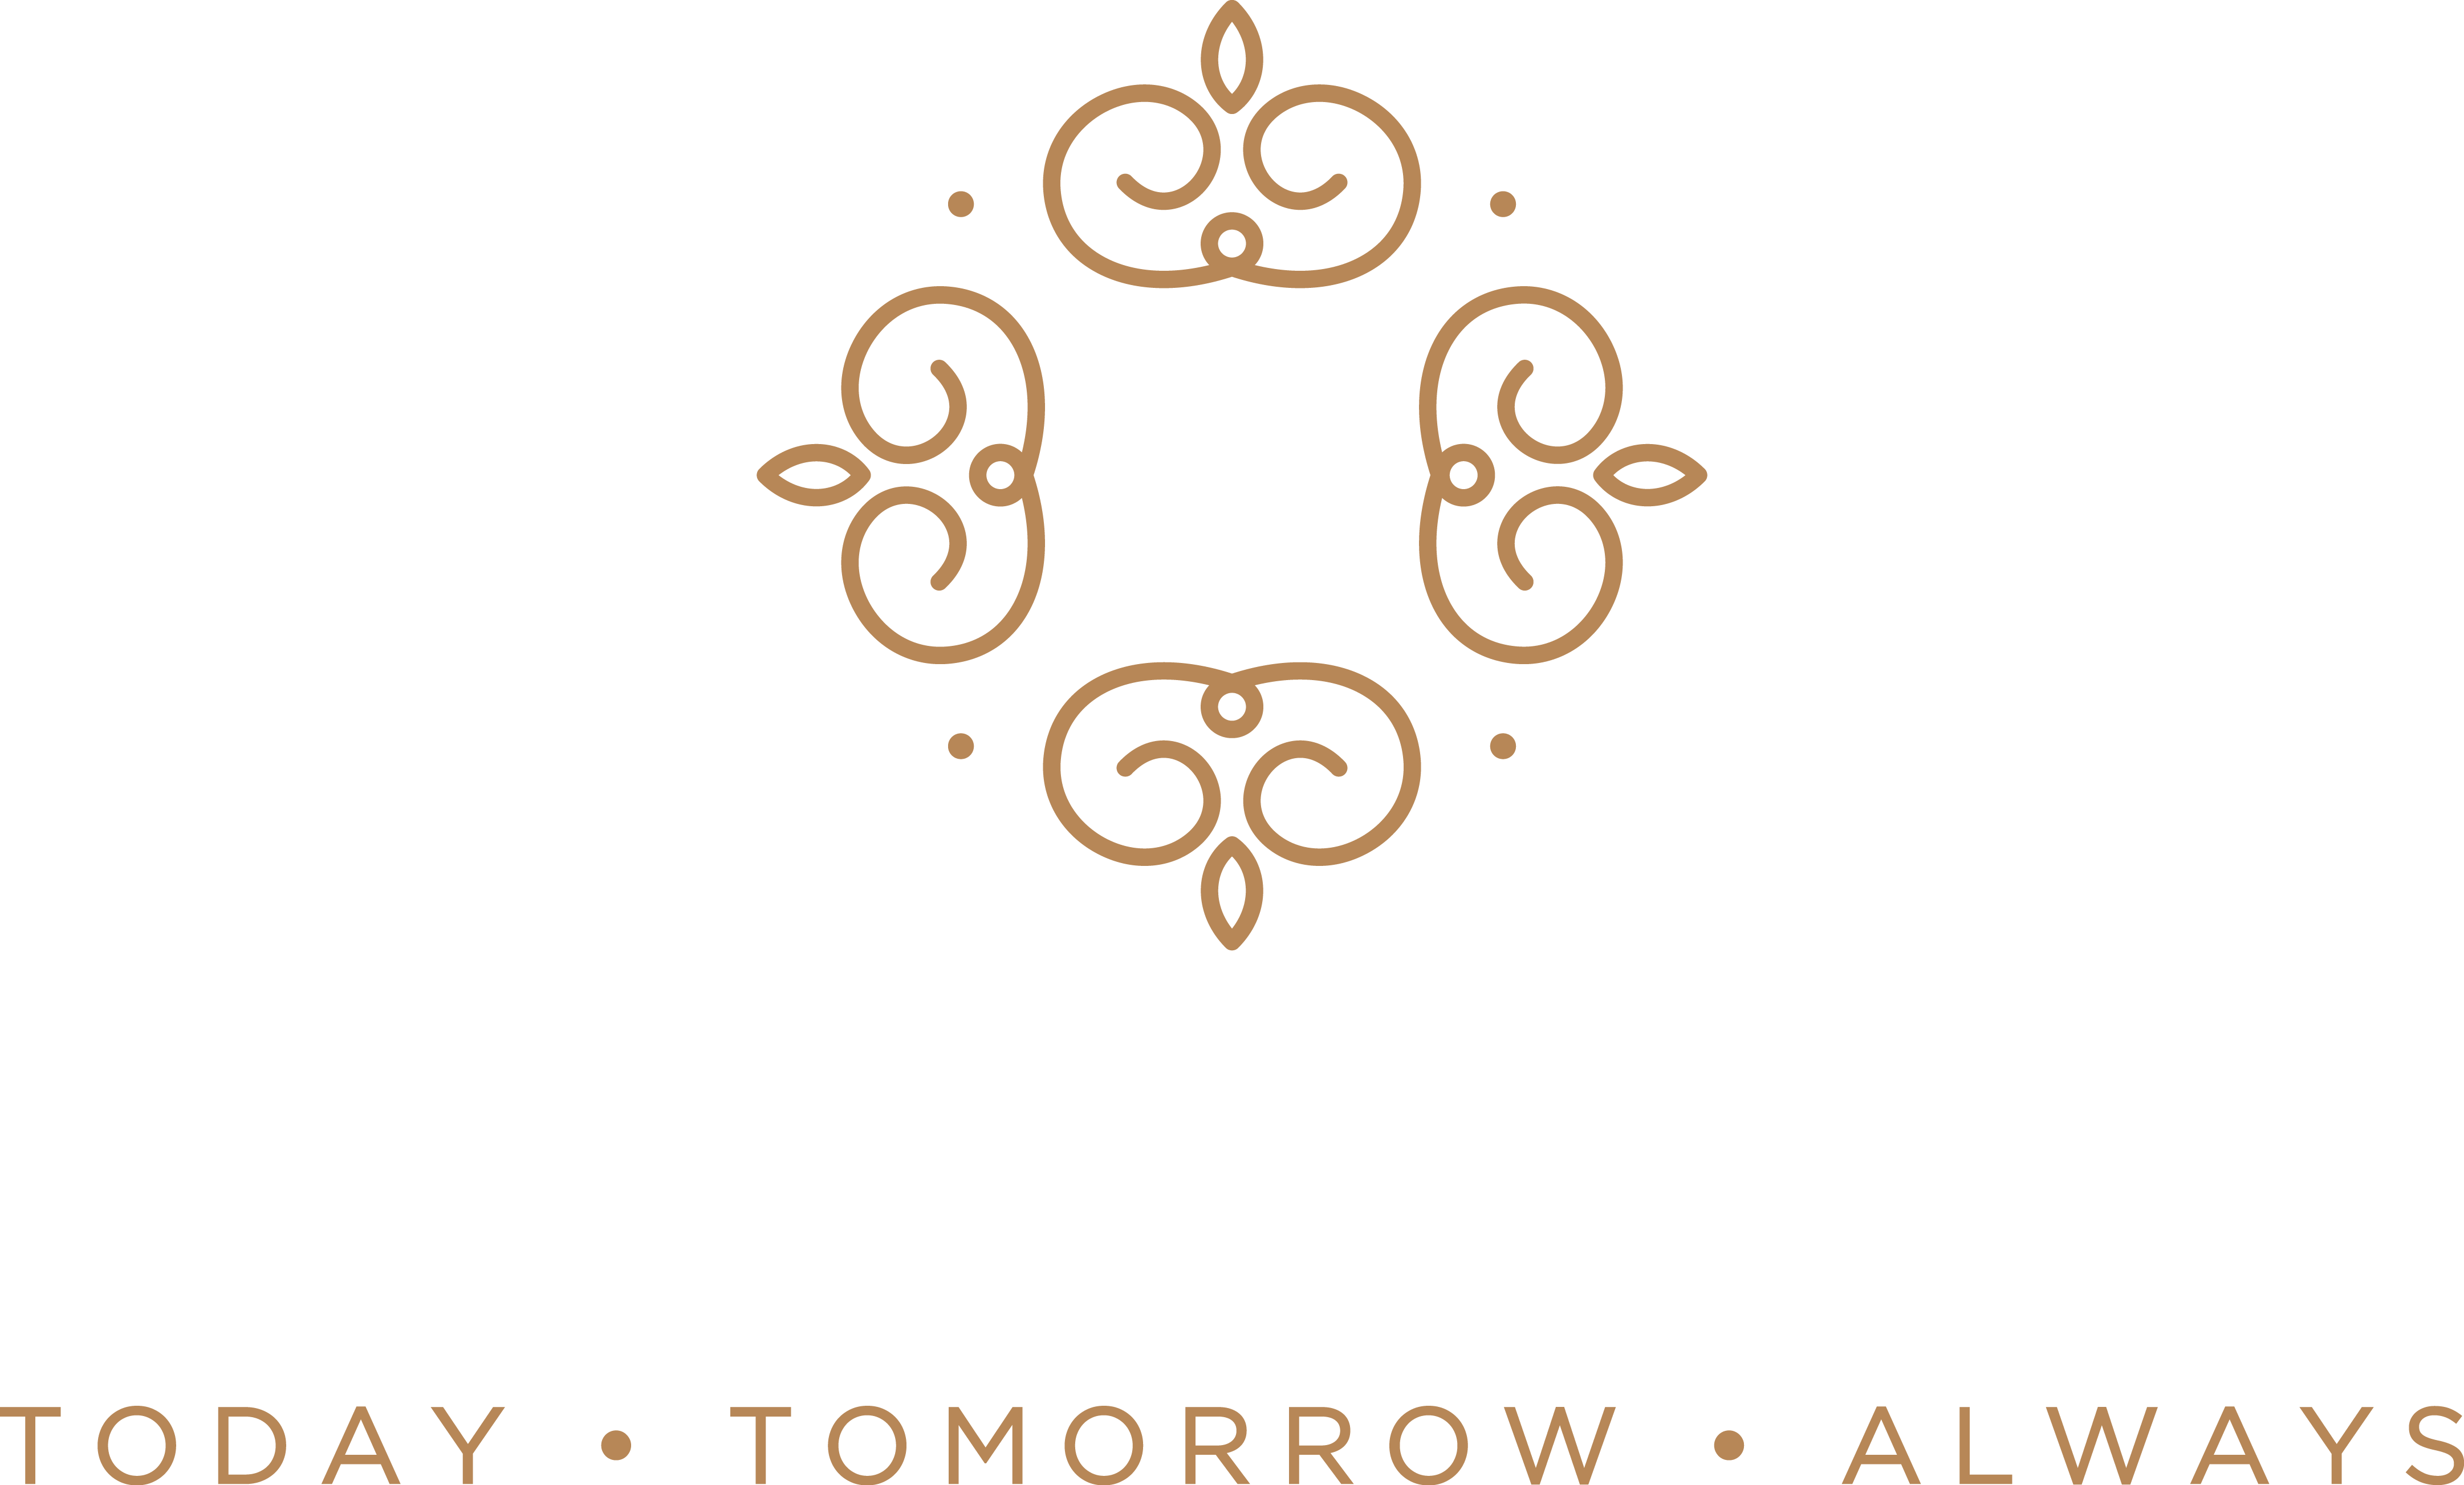 Medi Safe by Arabesques Jewels 